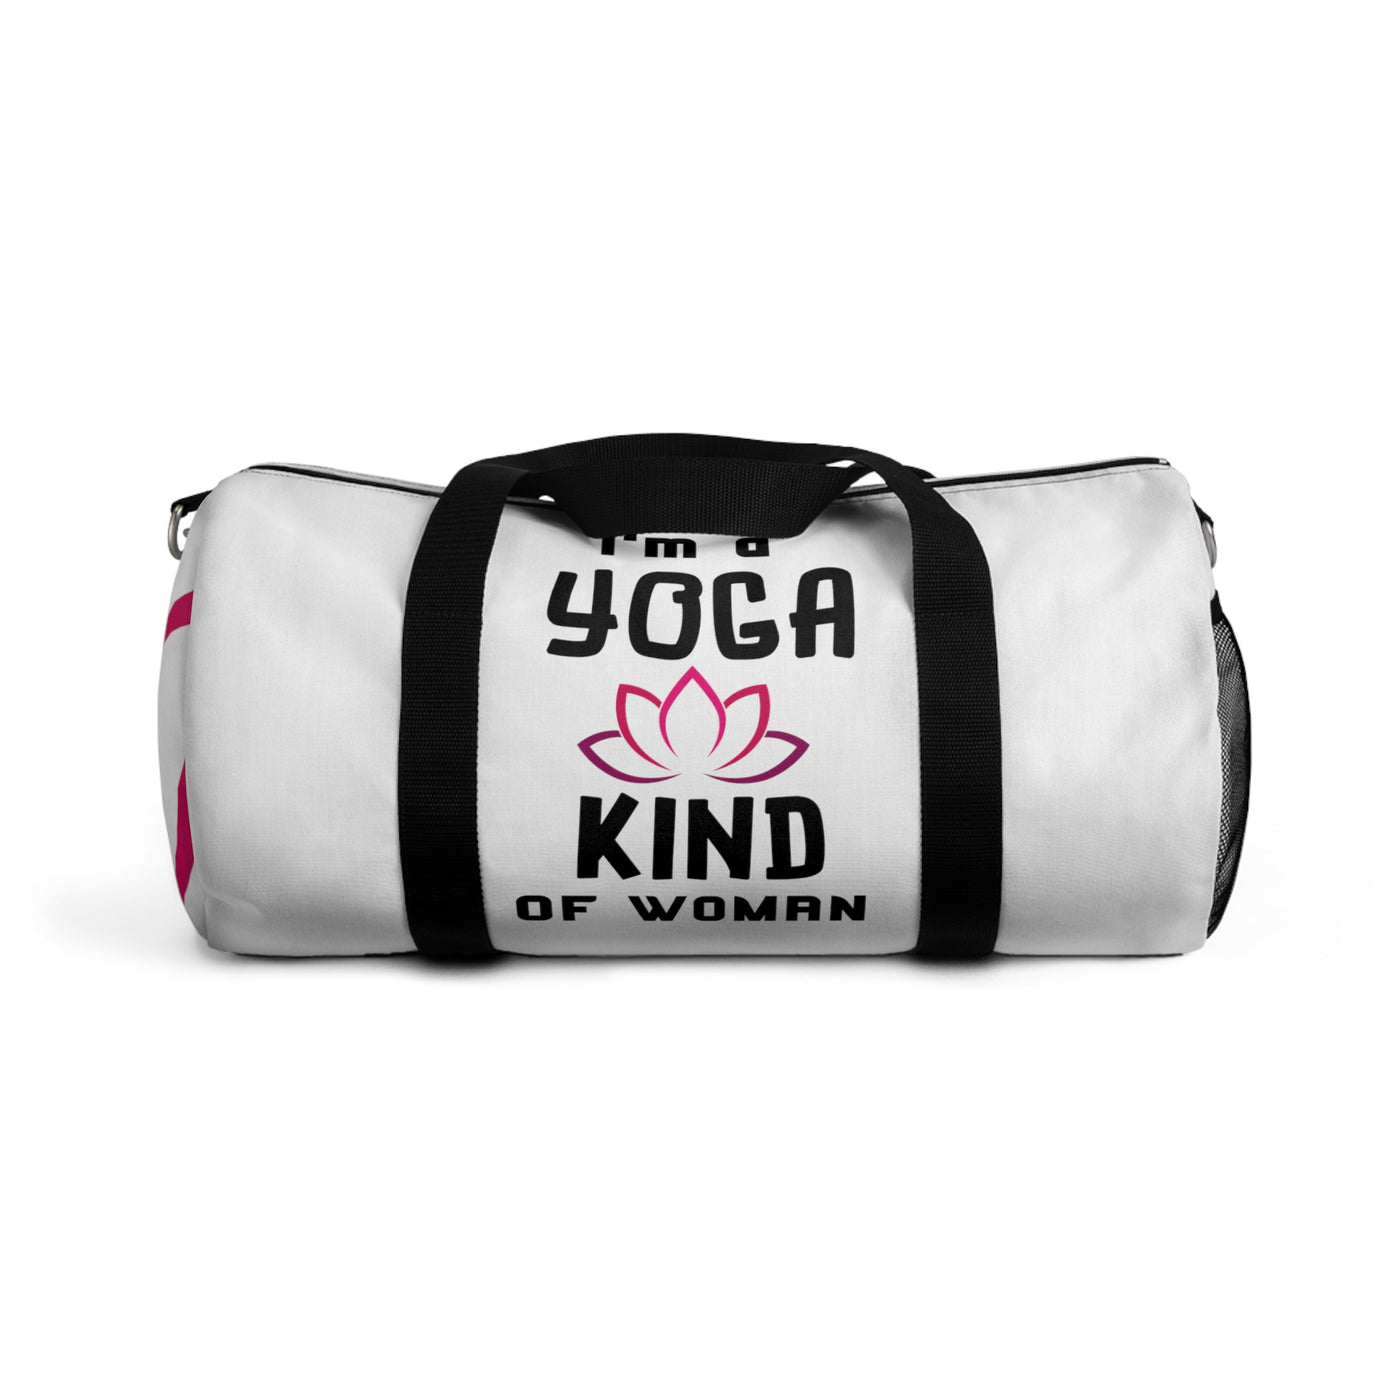 YOGA KIND OF WOMAN Duffel Bag - 2 sizes